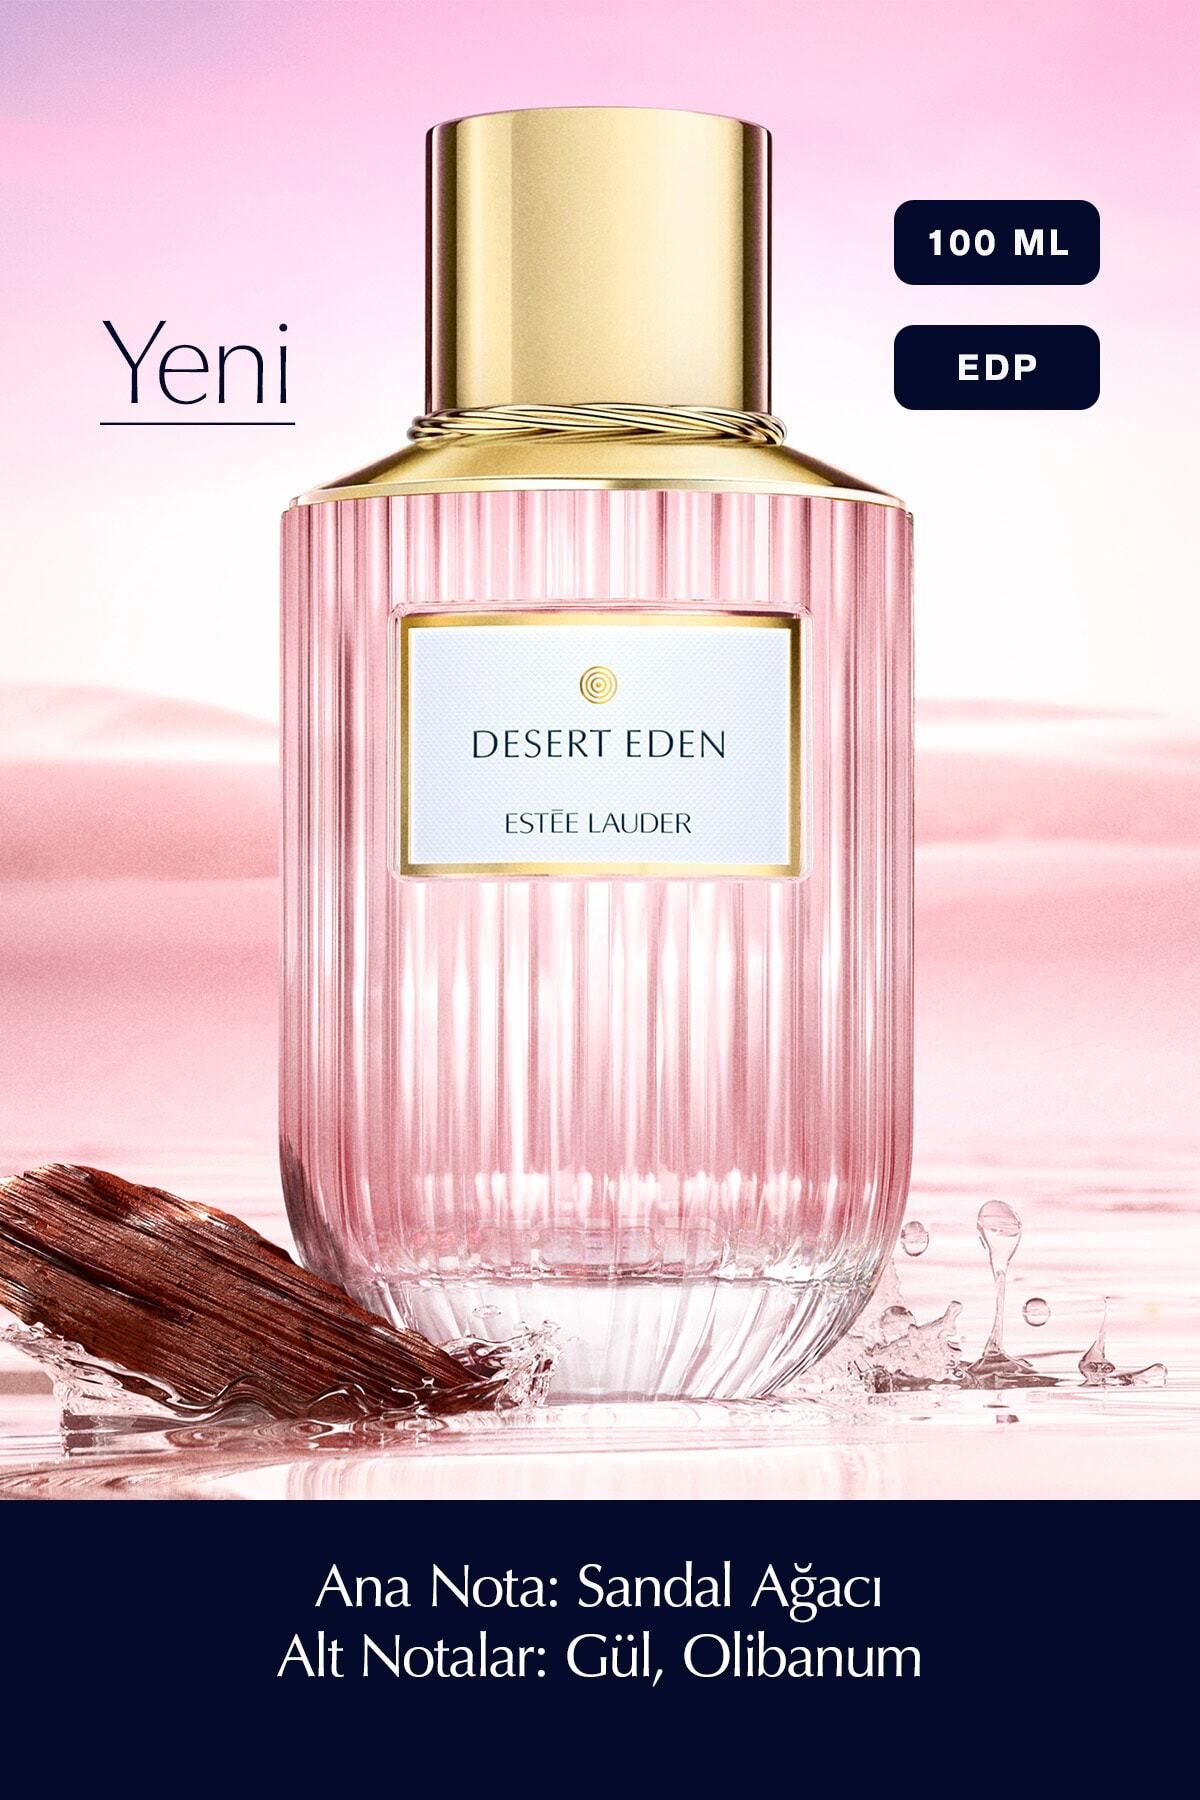 Estee Lauder Desert Eden - ادوپرفیوم 100 ml عطر زنانه مجموعه عطرهای لوکس